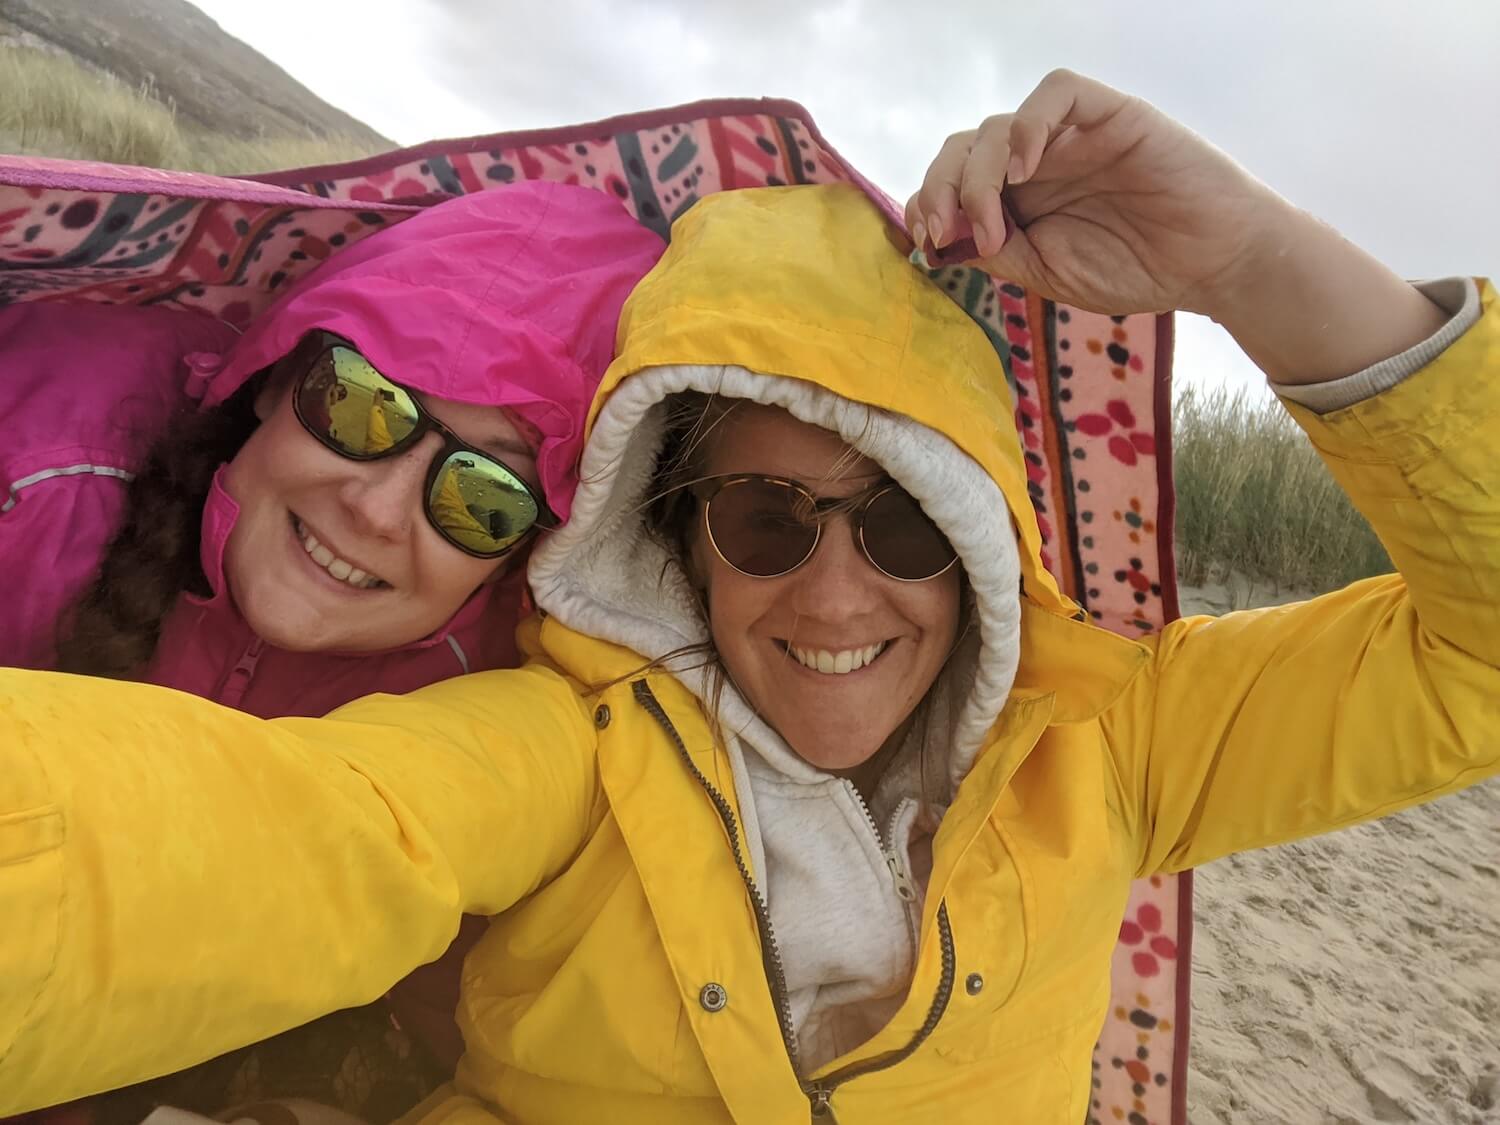 sunglasses are essential camping festival items - even when it's raining 